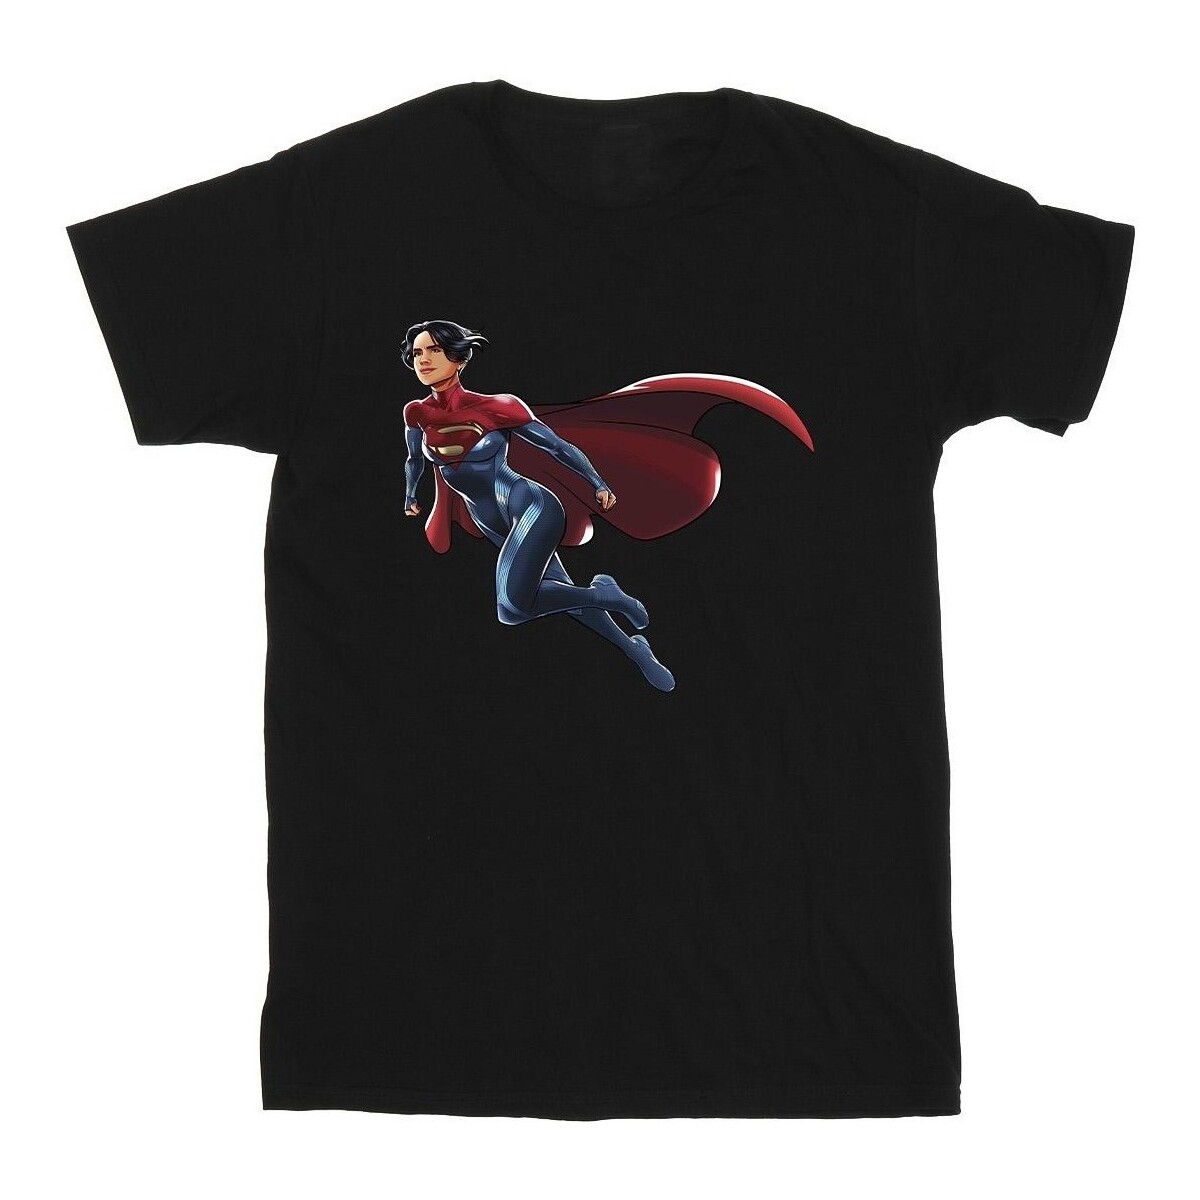 textil Hombre Camisetas manga larga Dc Comics The Flash Supergirl Negro